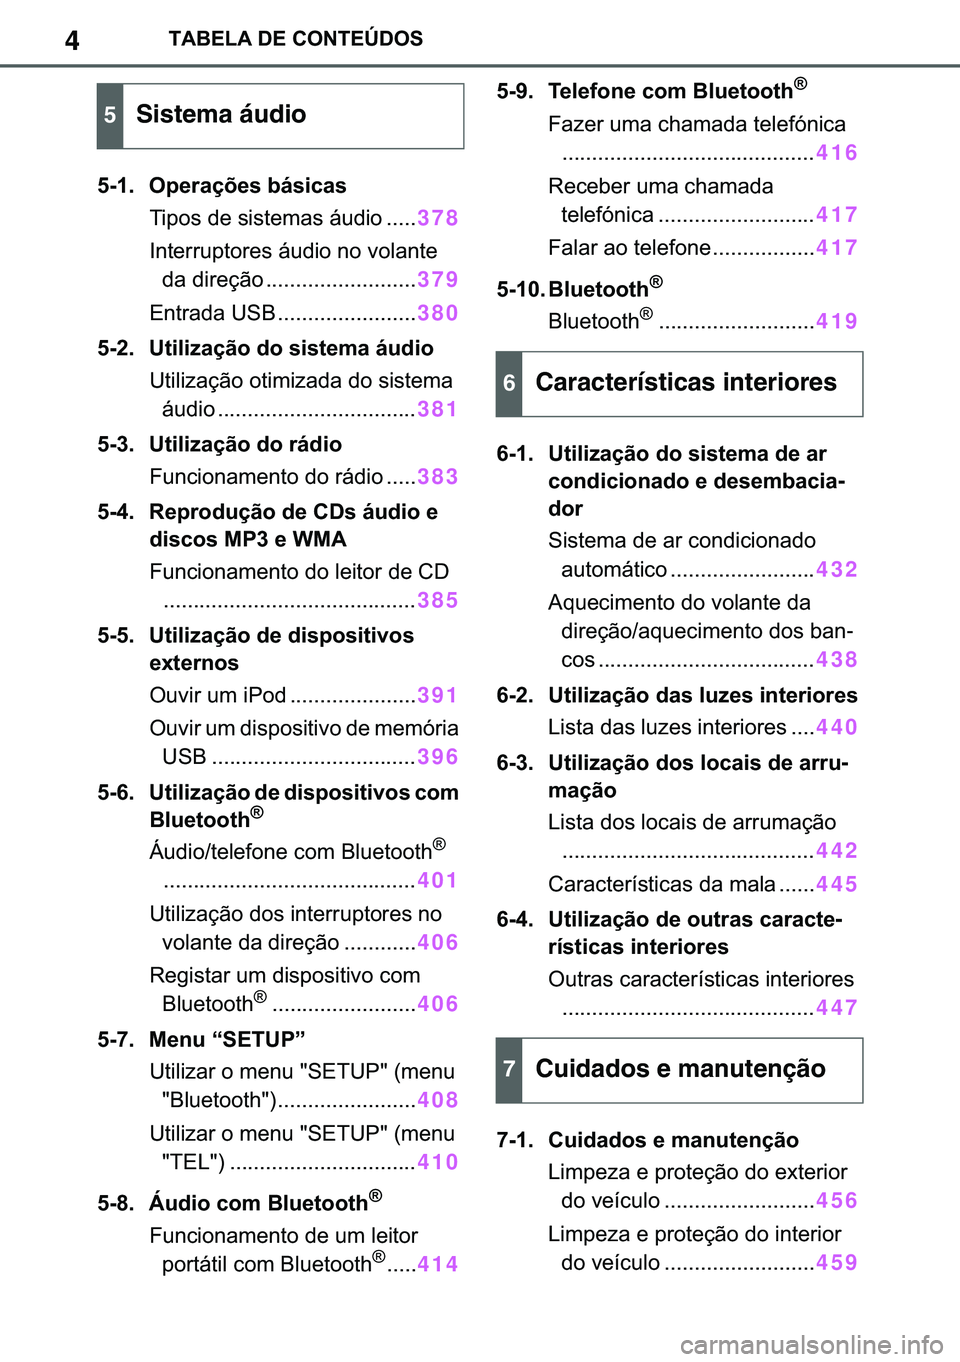 TOYOTA COROLLA 2021  Manual de utilização (in Portuguese) 4
�&�2�5�2�/�/�$ �+�9 �7�0�0�7 �(�(
�7�$�%�(�/�$���(��&�2�1�7�(�Ò��2�6
���� �2�S�H�U�D�o�}�H�V��E�i�V�L�F�D�V
�7�L�S�R�V��G�H��V�L�V�W�H�P�D�V��i�X�G�L�R �����378
�,�Q�W�H�U�U�X�S�W�